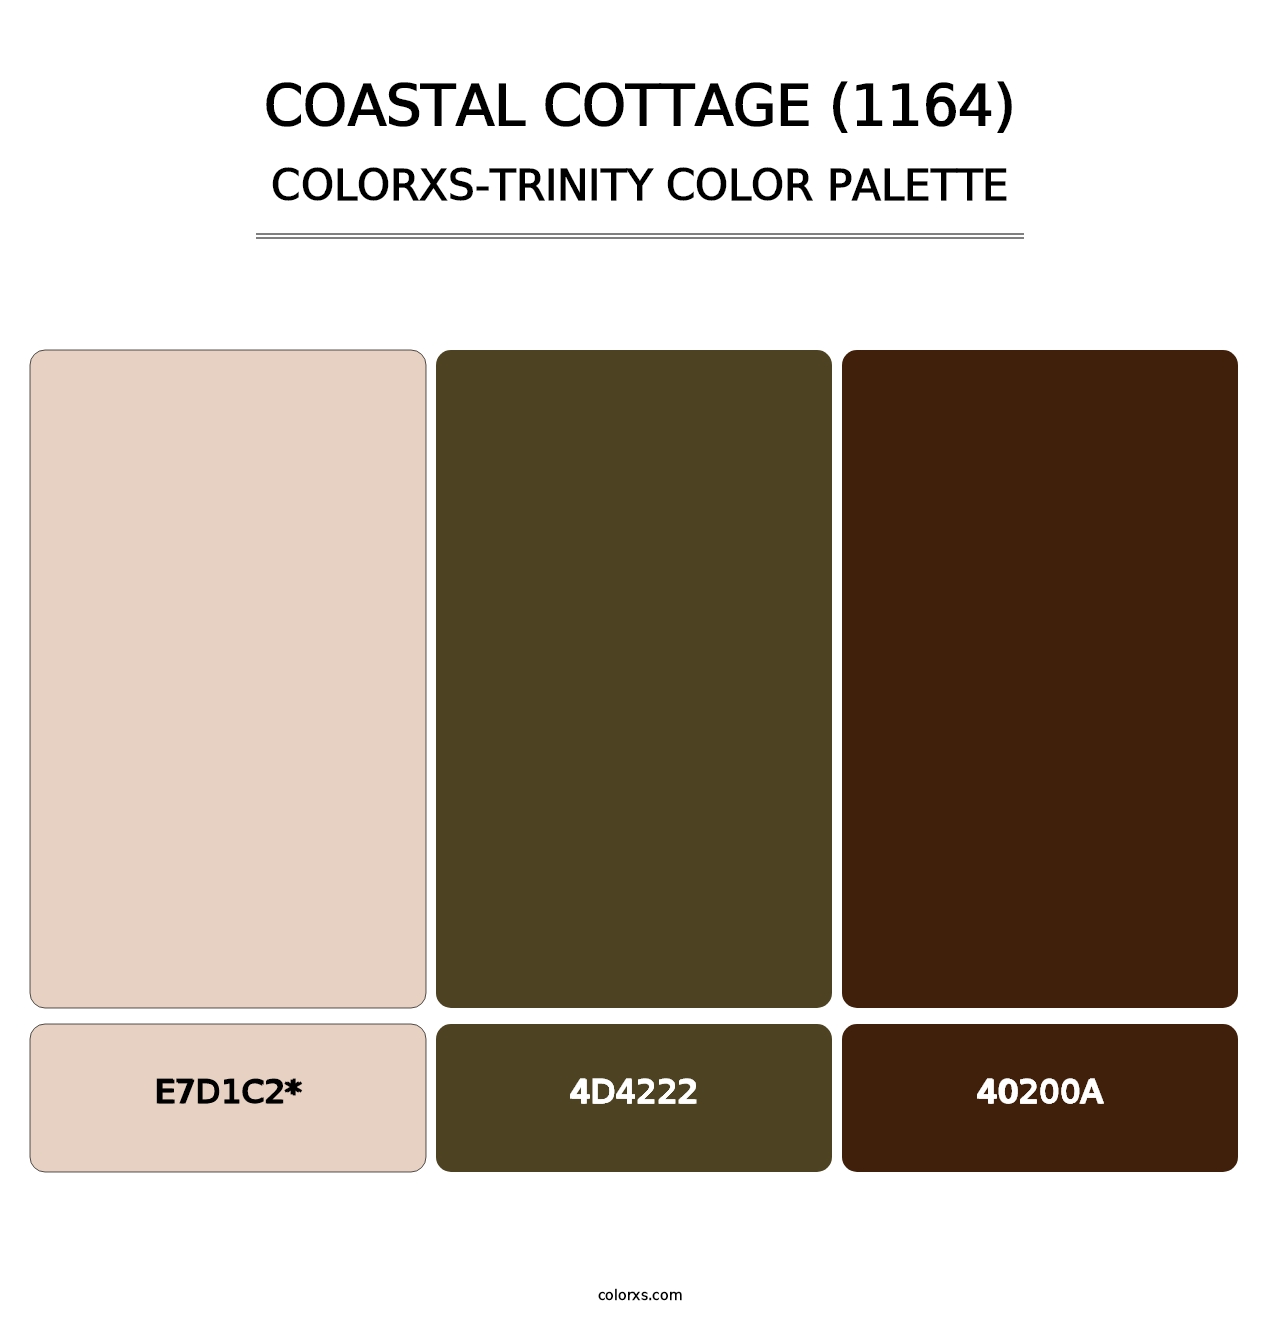 Coastal Cottage (1164) - Colorxs Trinity Palette